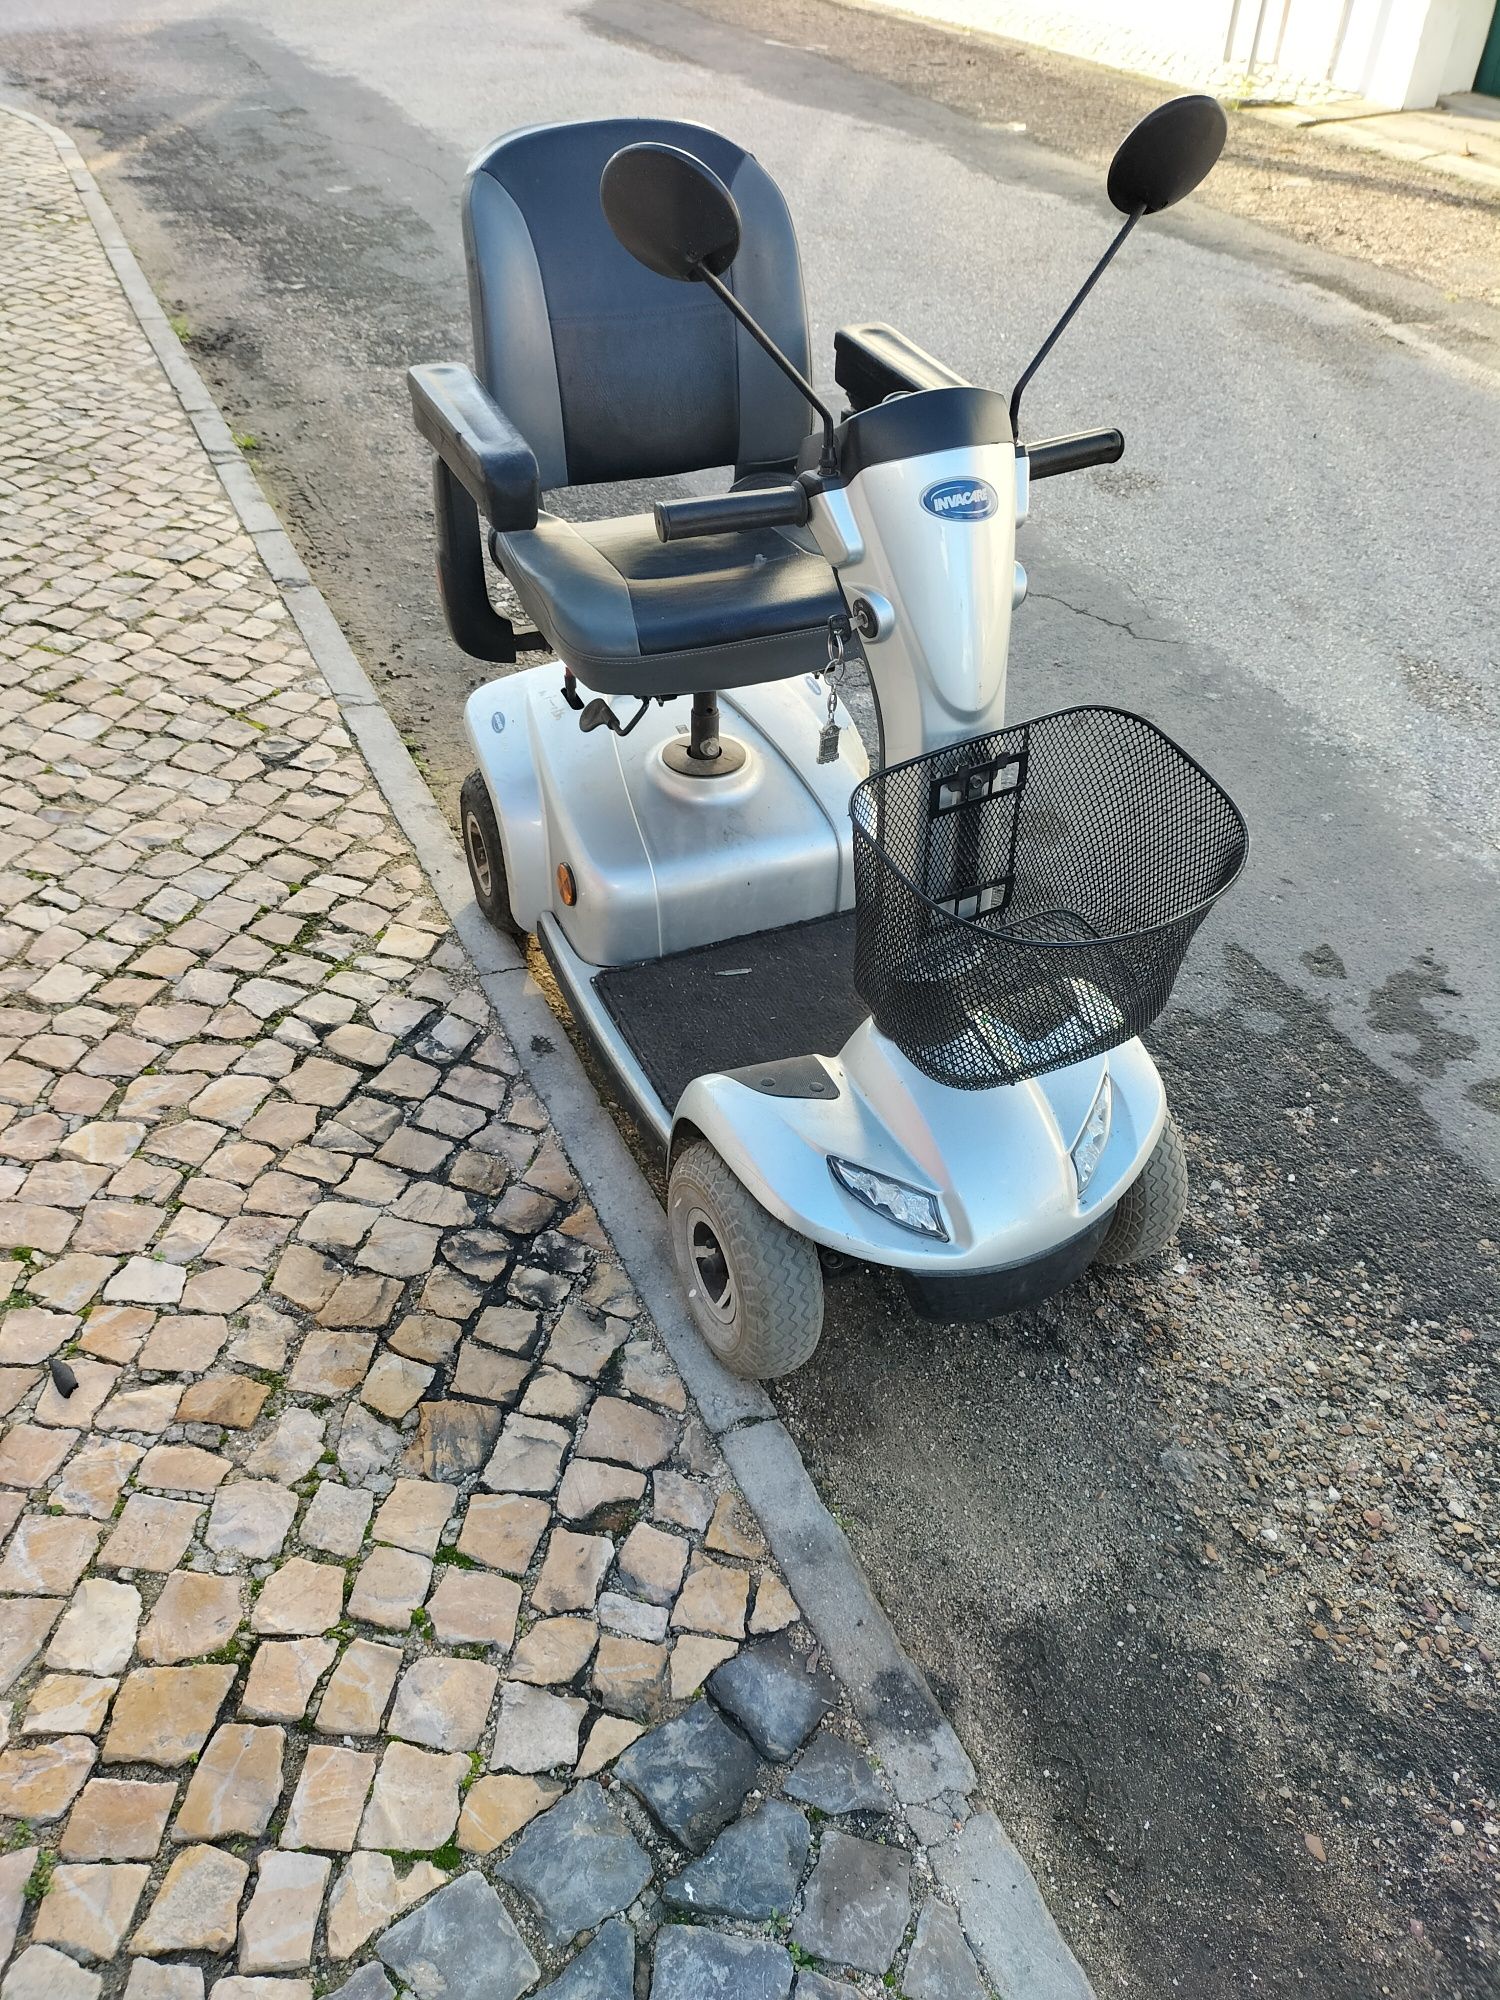 Scooter elétrica 

Mota 01 - 5